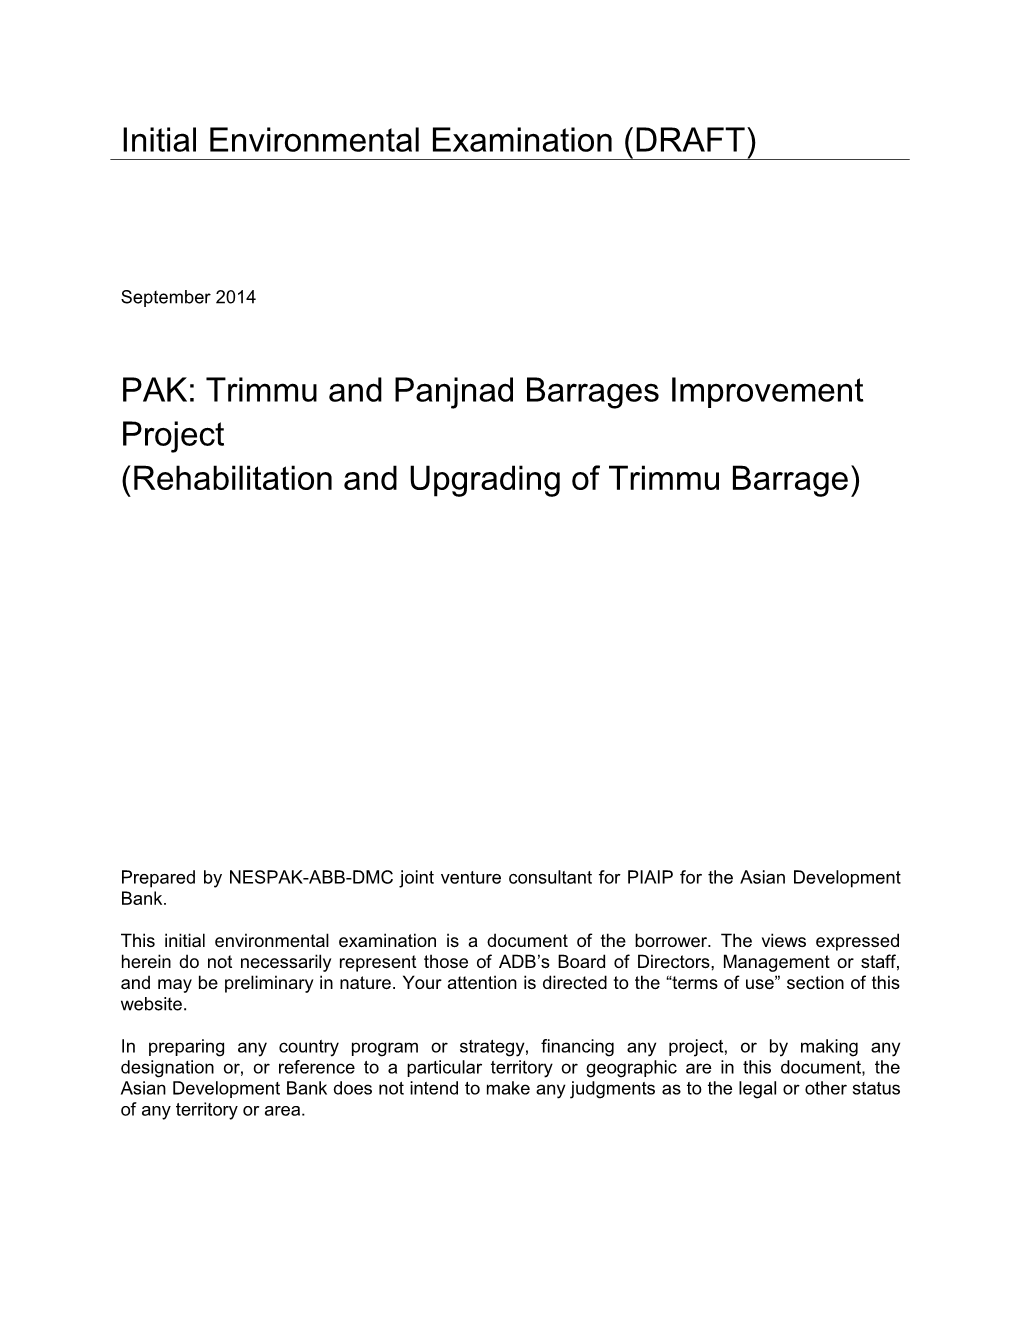 Rehabilitation and Upgrading of Trimmu Barrage)